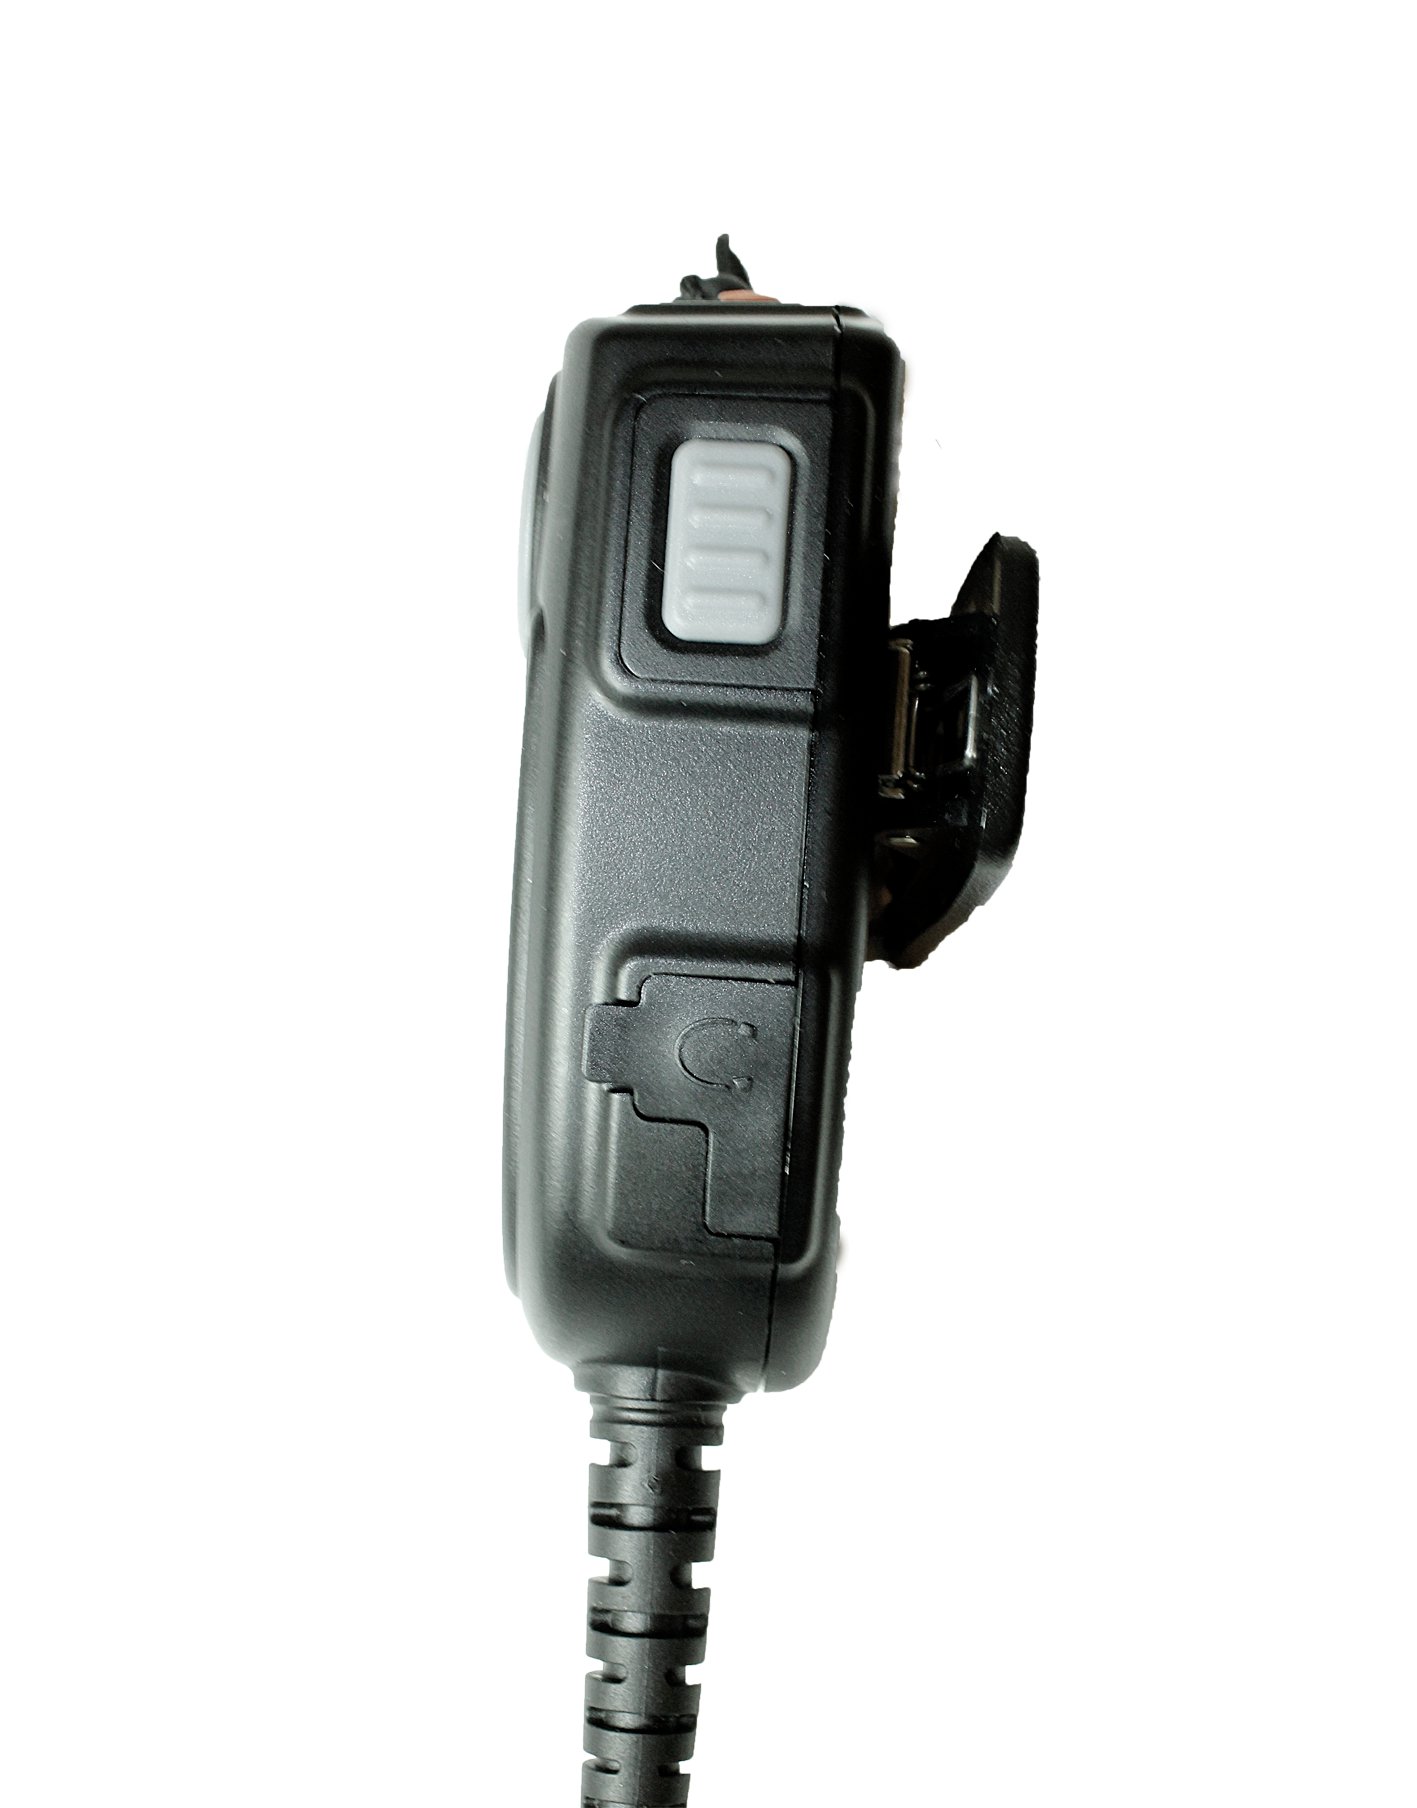 TITAN Lautsprechermikrofon MM20 mit Nexus 03A passend für Motorola MXP600, R7, R7A